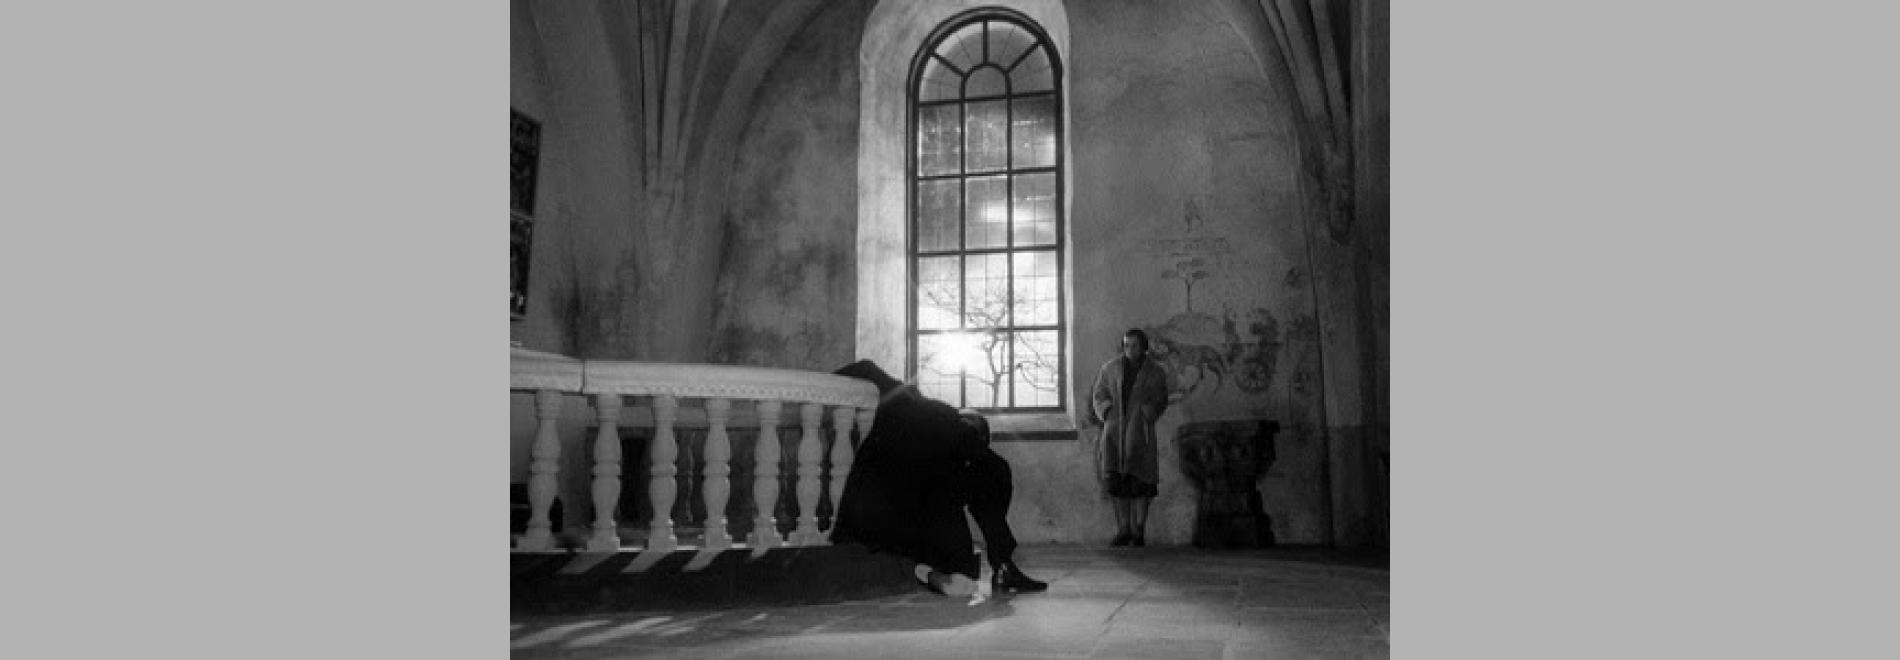 Nattvardsgärterna / Els combregants (Ingmar Bergman, 1962)